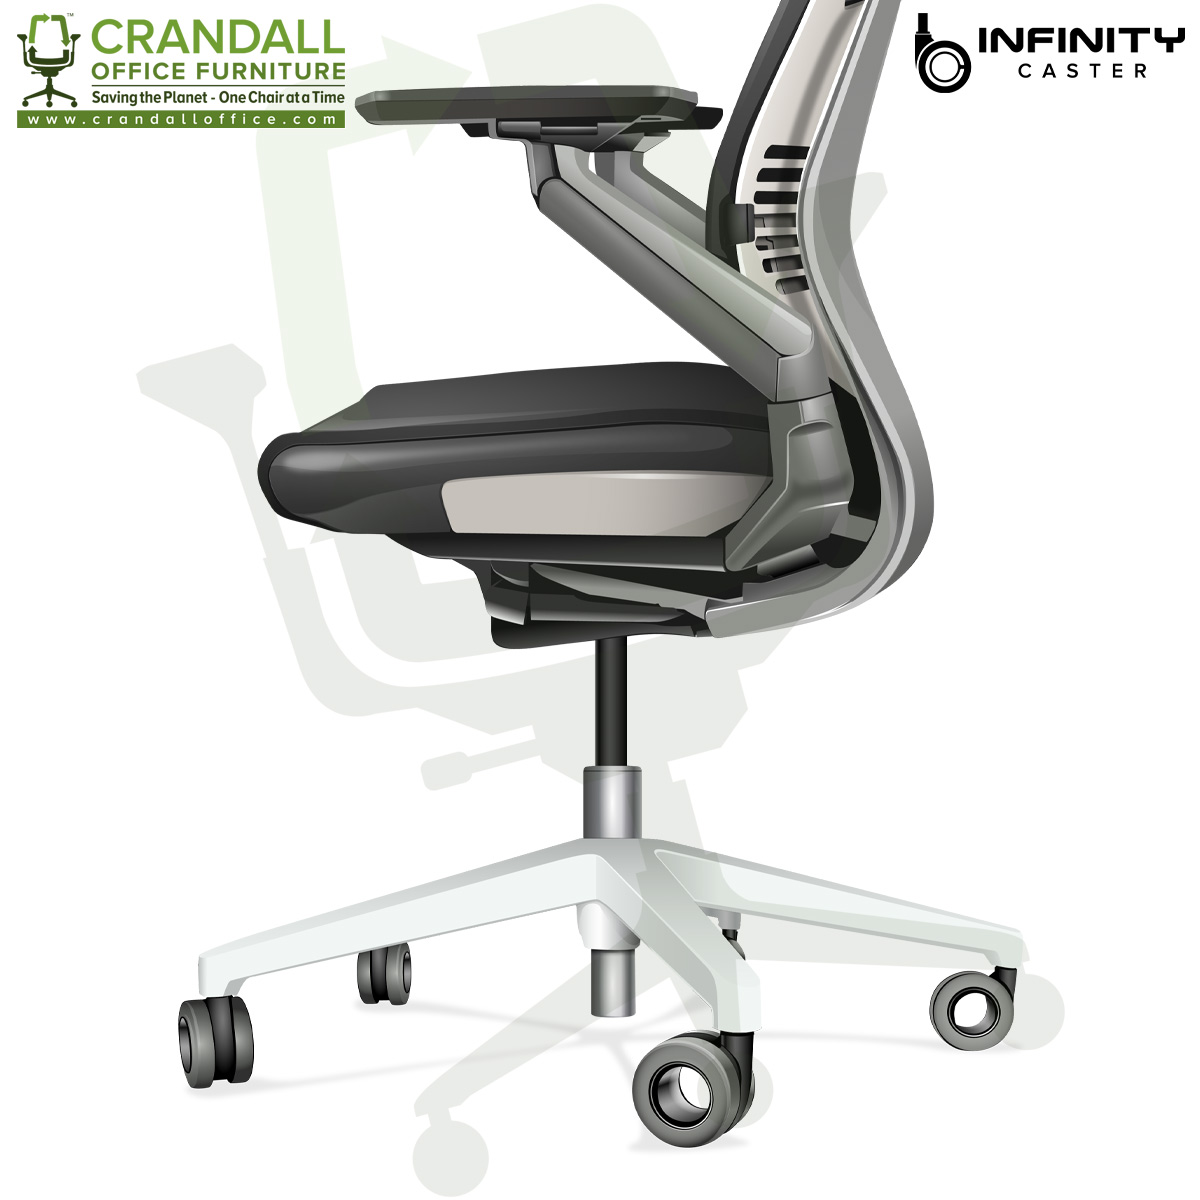 inkomen ontwerp Toerist Infinity 65mm (2.5 inch) Hard Floor Self Braking Casters - Crandall Office  Furniture